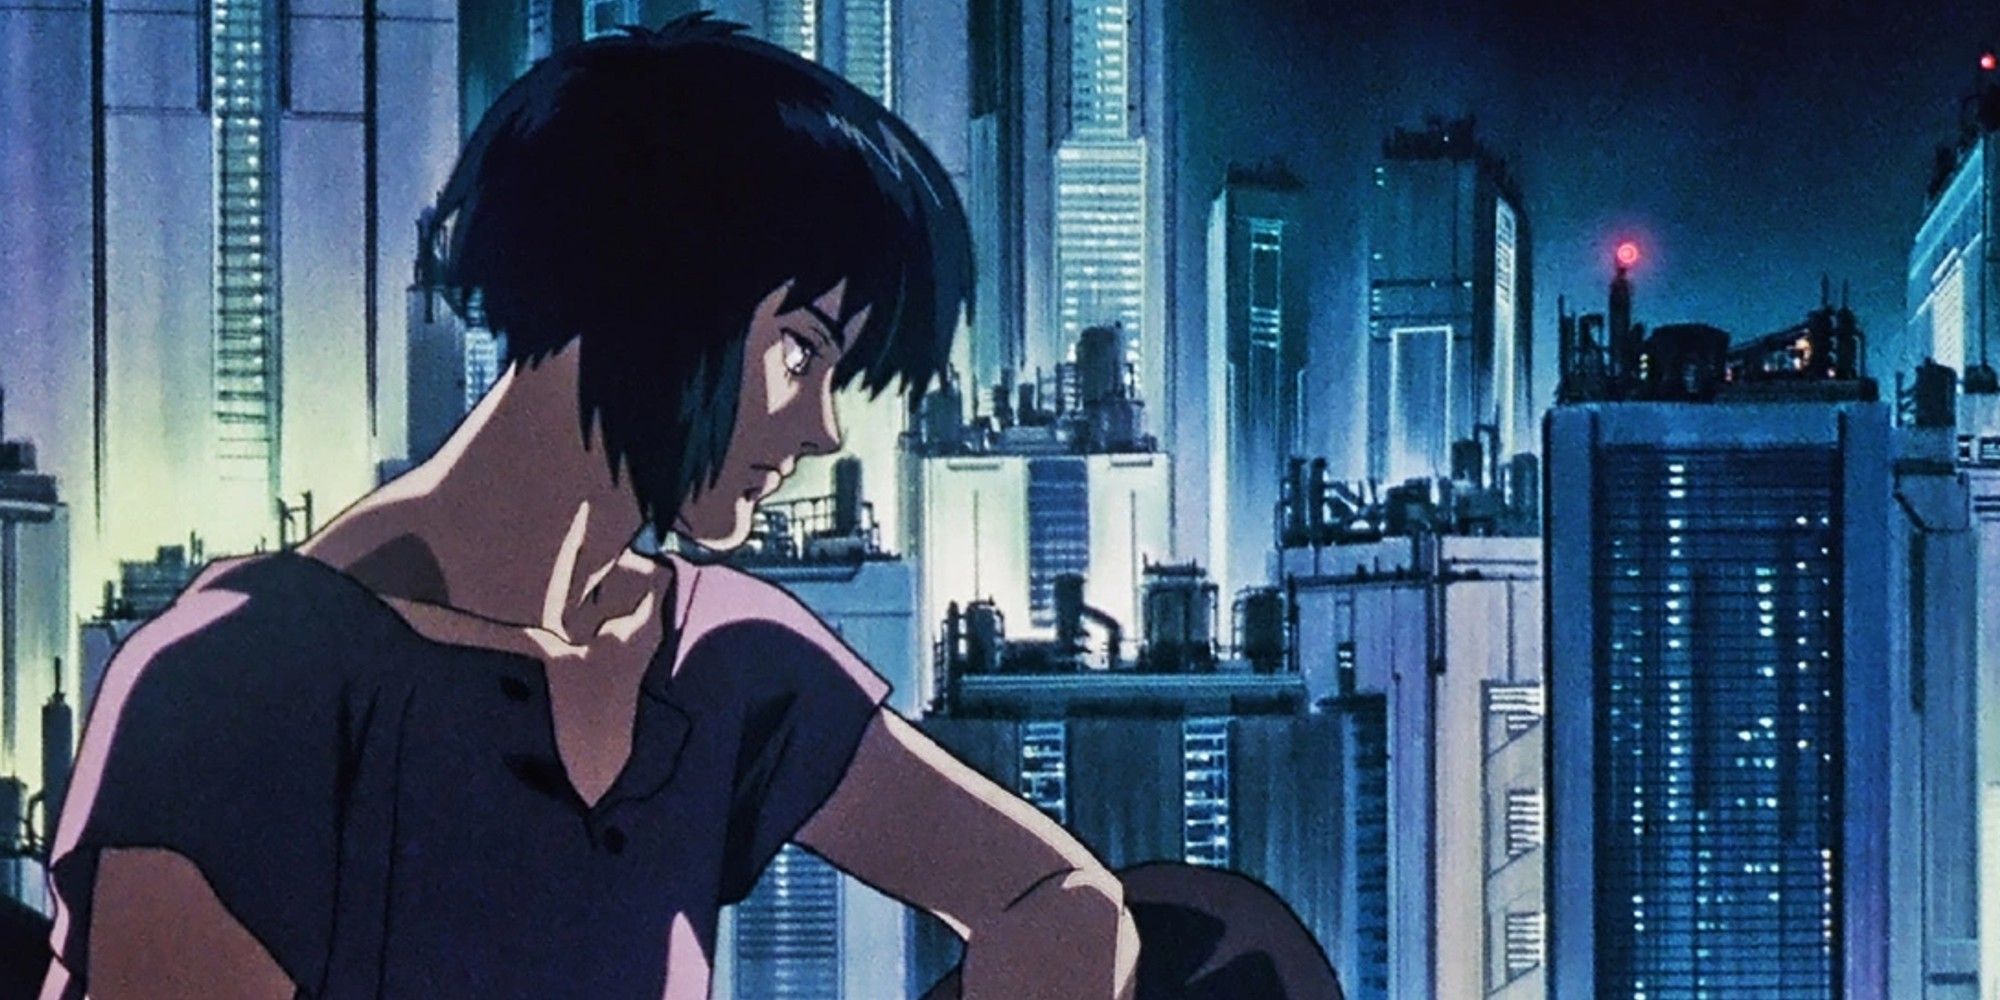 Ghost in the Shell Atsuko Tanaka as Major Motoko Kusanagi looking at skyline